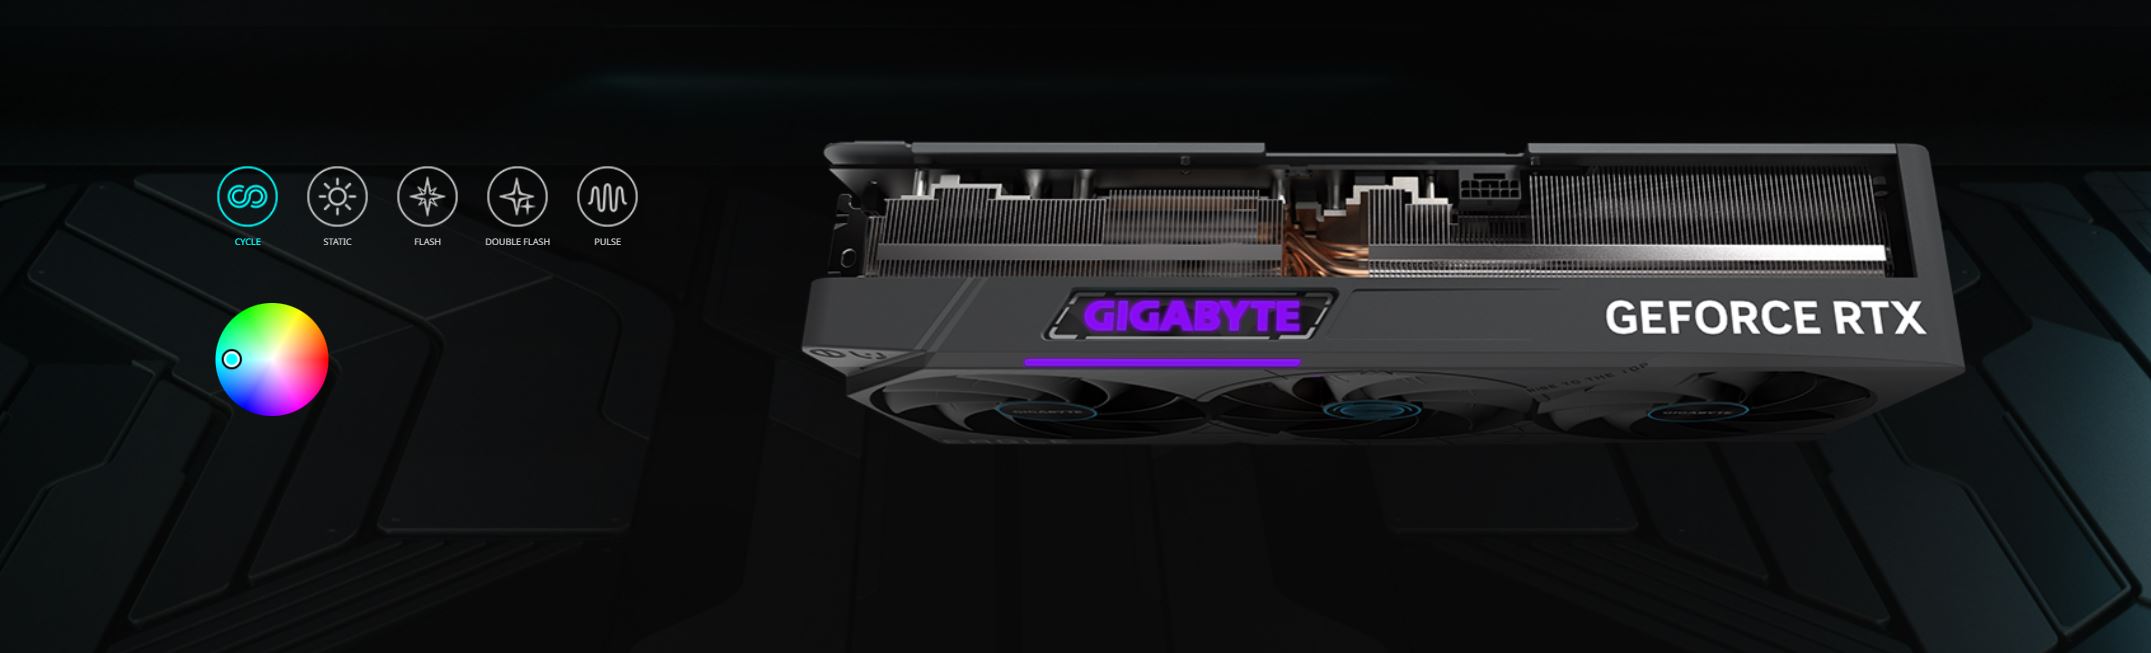 Gigabyte GeForce RTX 4080 16GB EAGLE Graphics GV-N4080EAGLE-16GD